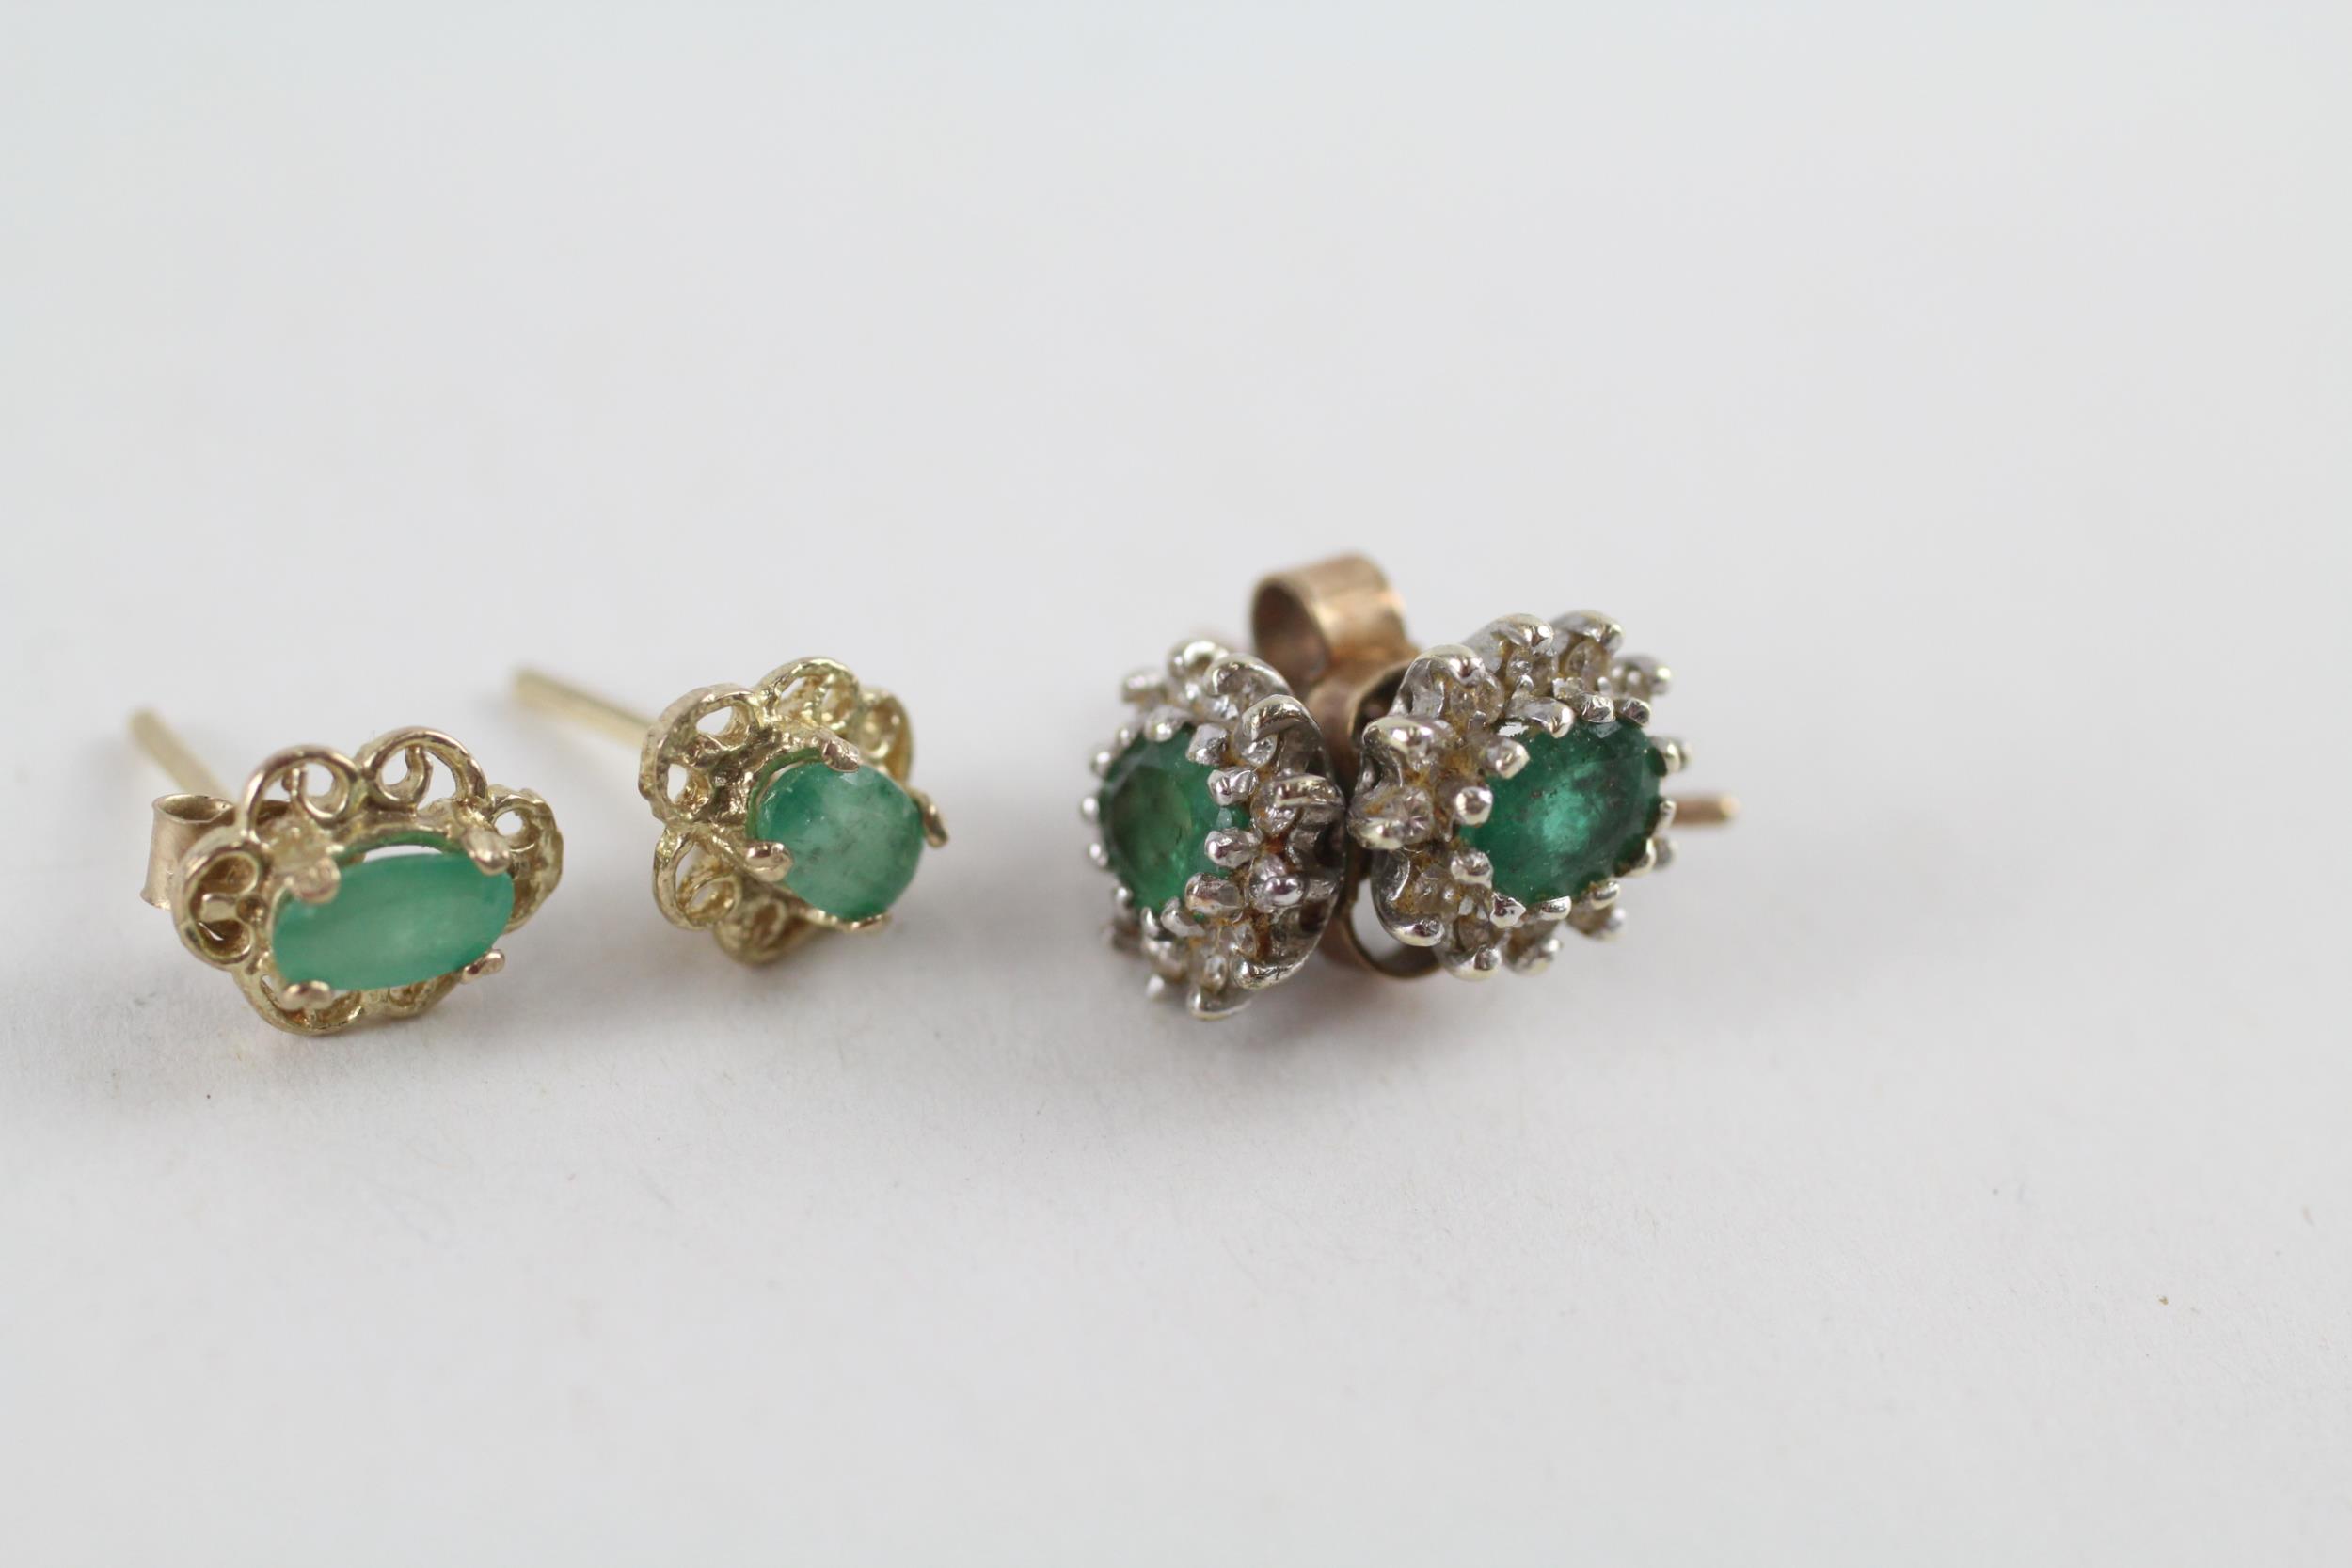 2x 9ct gold emerald & diamond earrings (2.3g) - Image 3 of 4